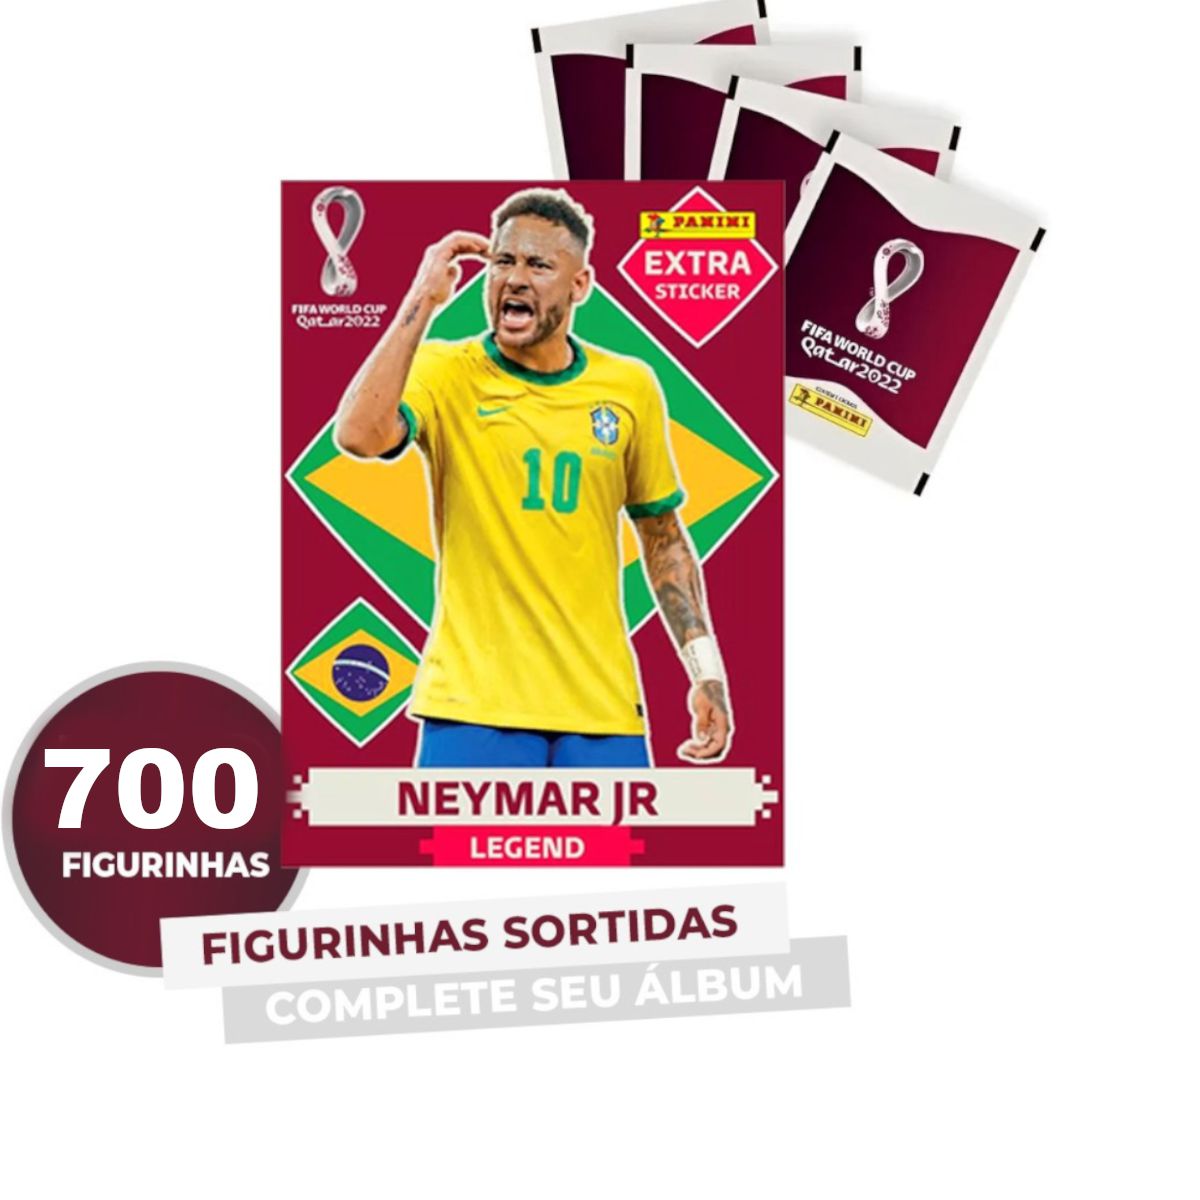 Neymar Legend Gold - Copa do Mundo Qatar 2022 Panini